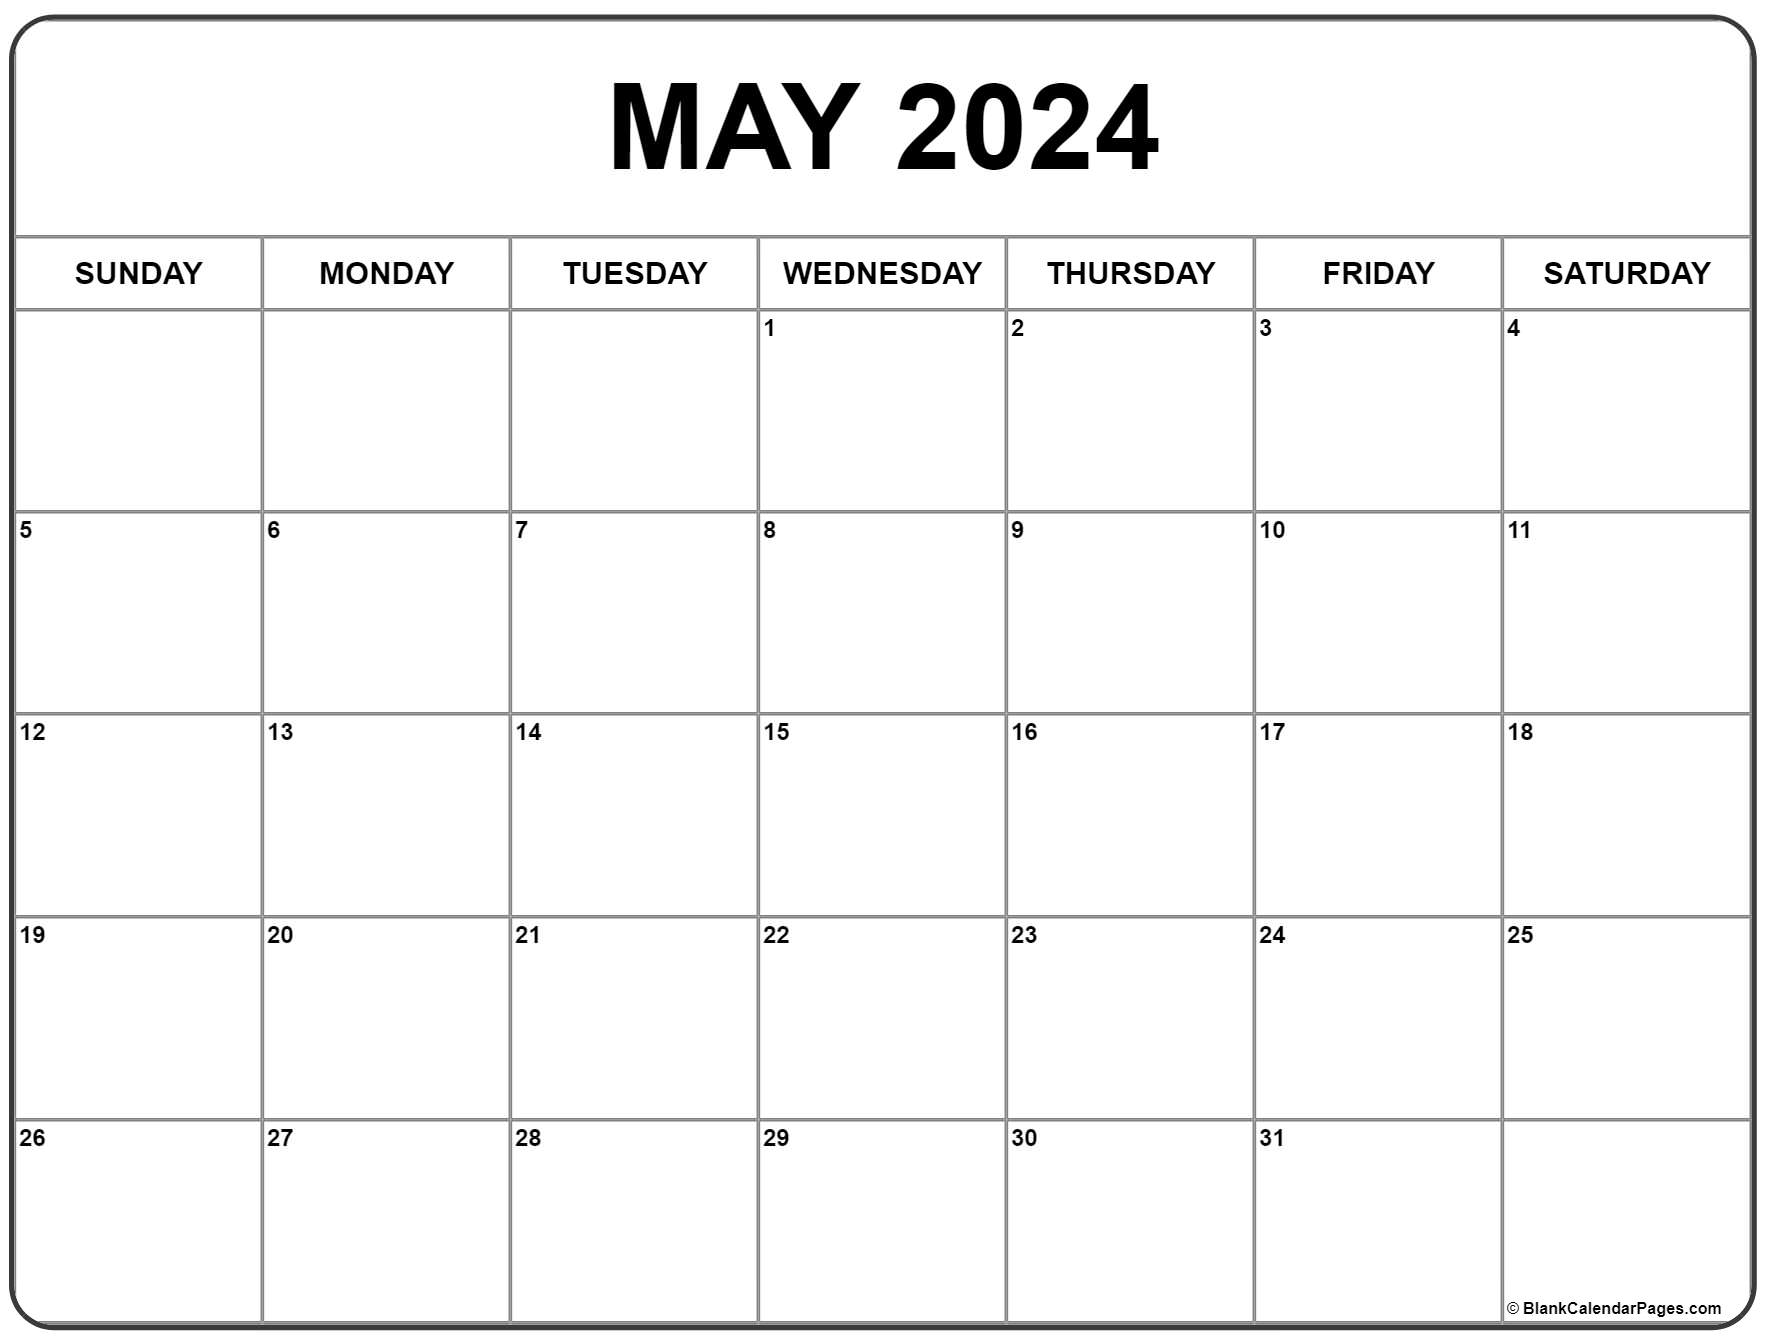 May 2024 Calendar | Free Printable Calendar for Blank May 2024 Calendar Printable